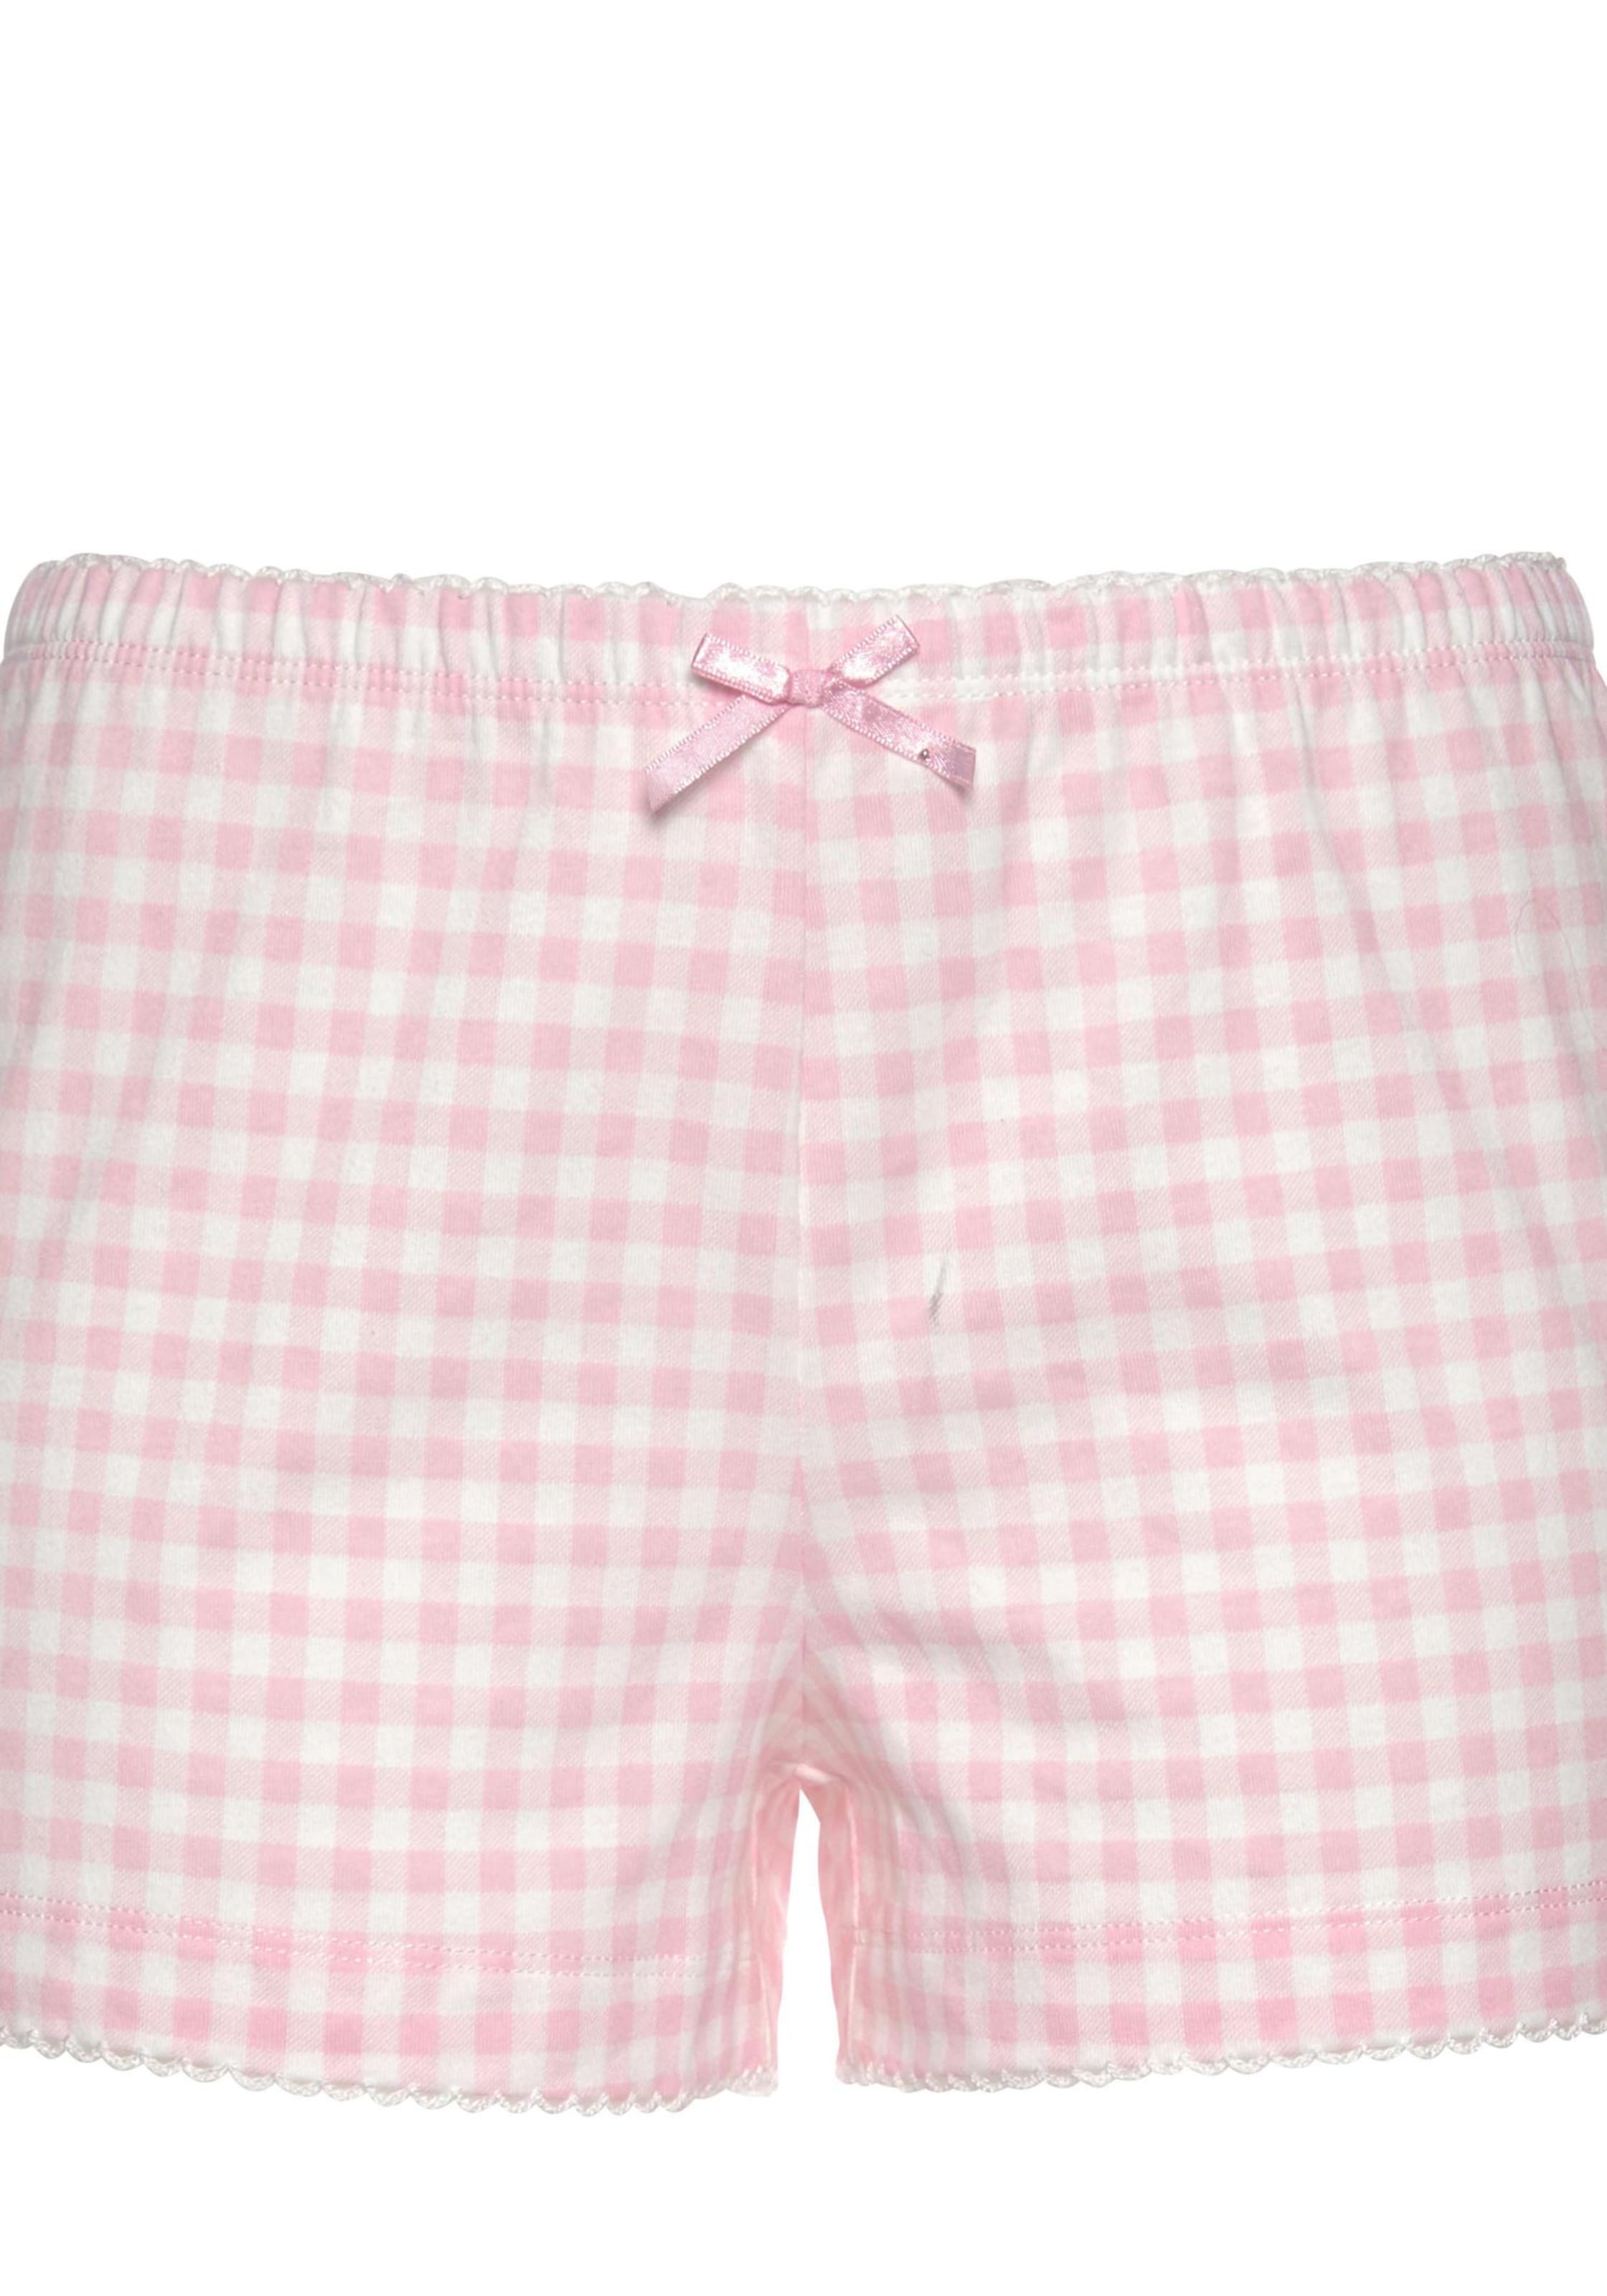 Damenmode Nachtwäsche & Homewear Vivance Dreams Shorty in rosa-weiß 